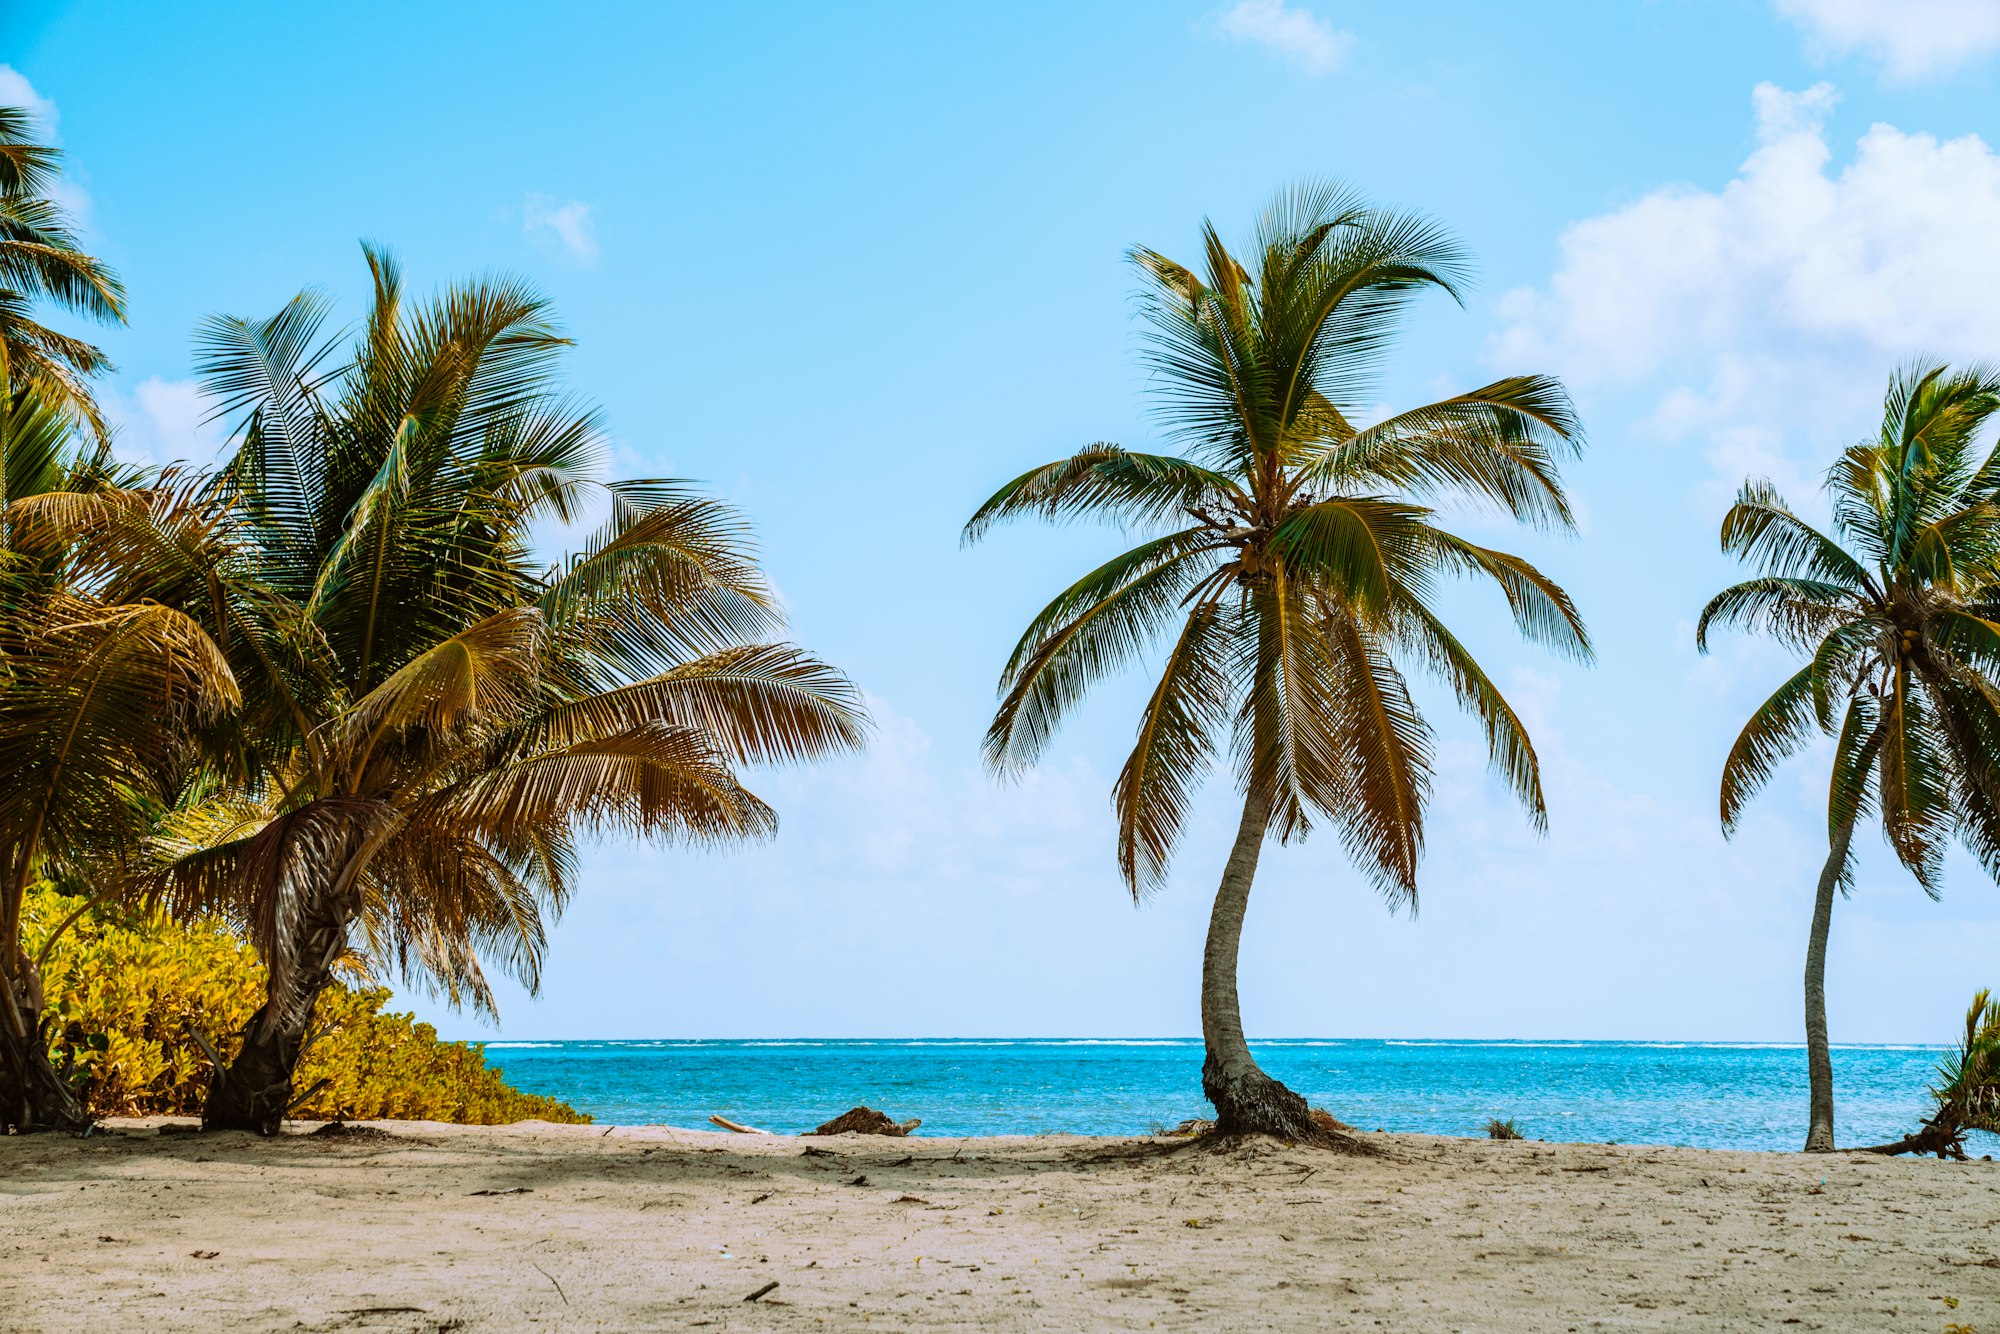 Palm trees along the sandy shoreline of a tropical beach, Ambergris Caye, Belize, Photo by Meritt Thomas / Unsplash